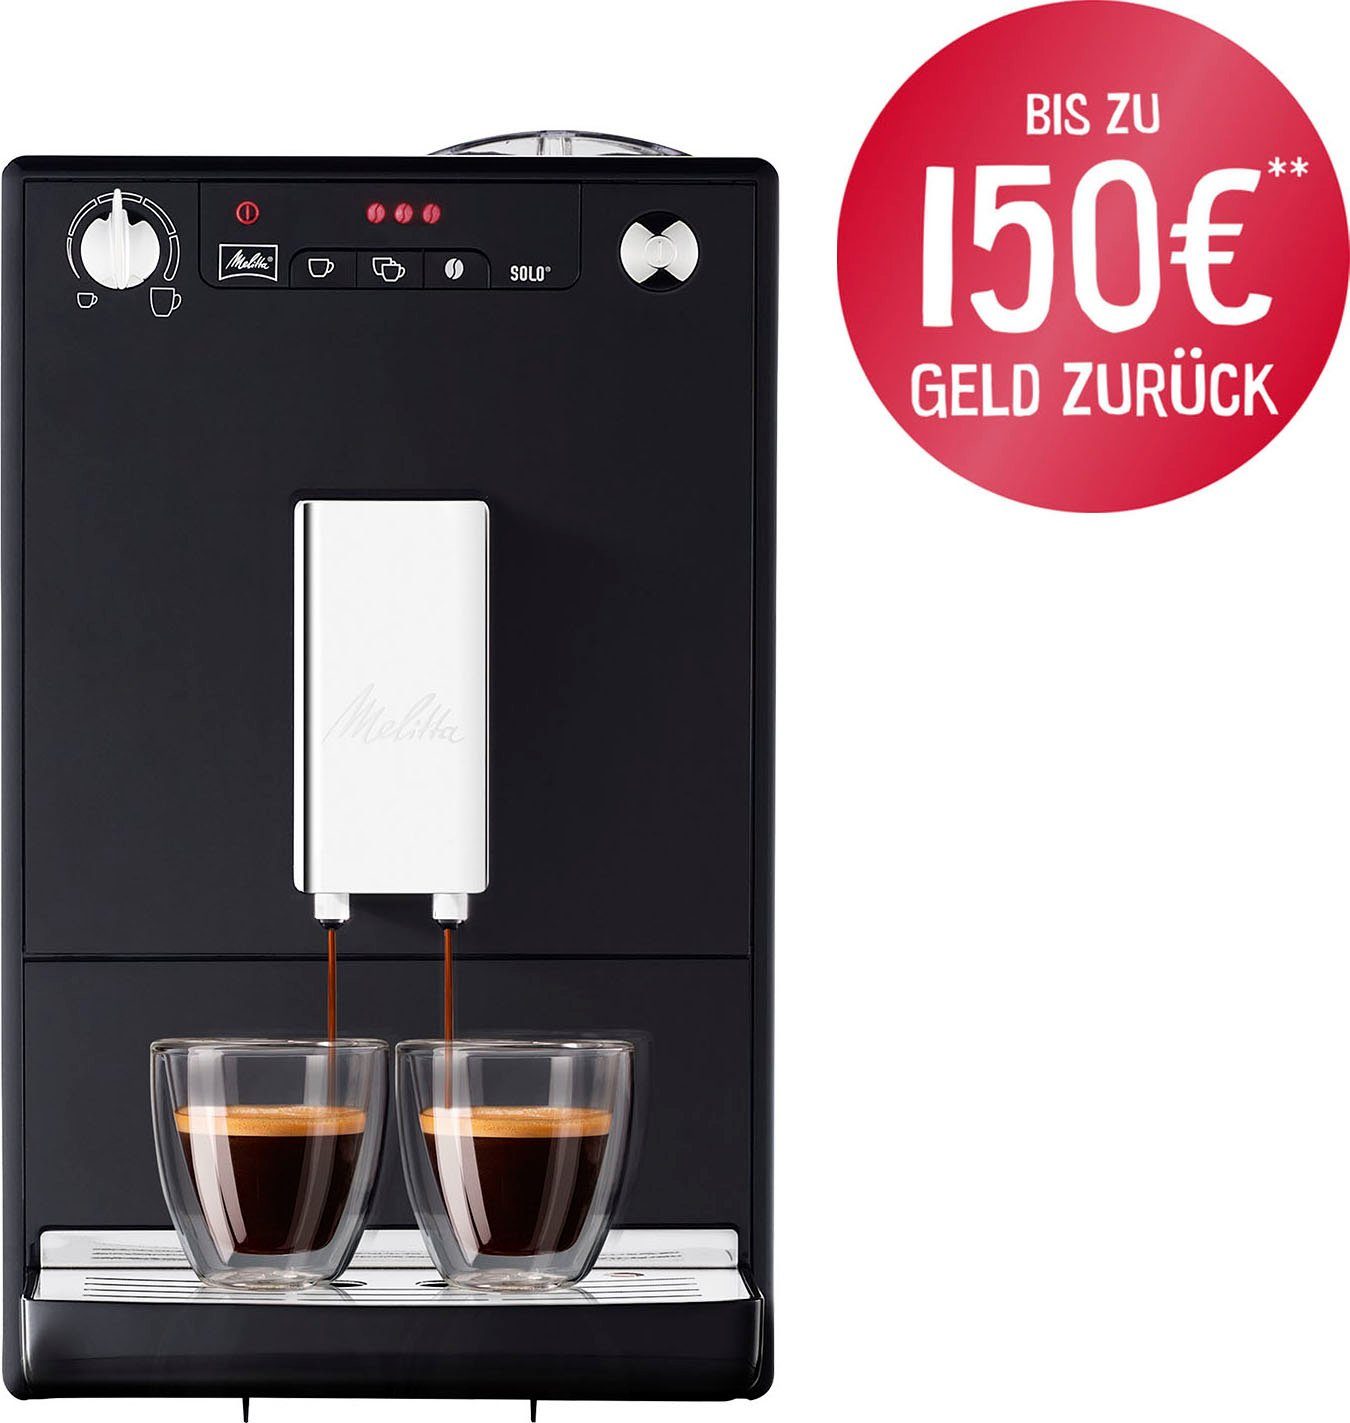 & 20cm crème nur Espresso, Café schwarz, Solo® Melitta Kaffeevollautomat für E950-201, breit Perfekt